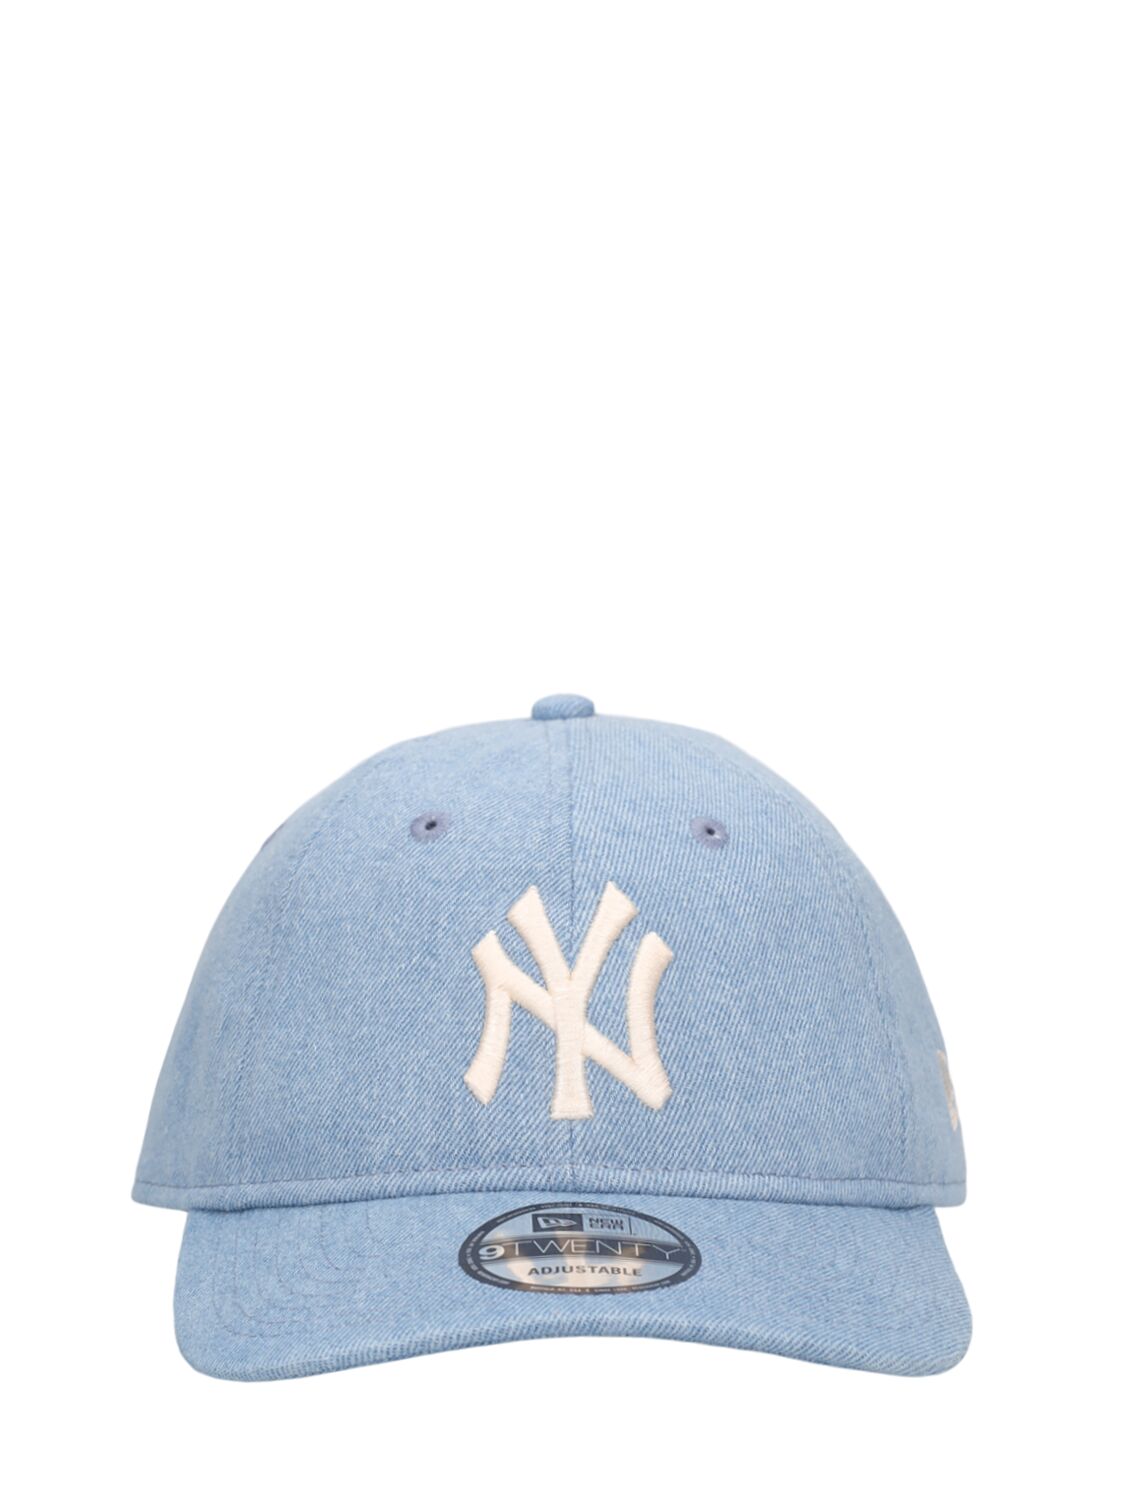 Image of Washed Denim New York Yankees Cap